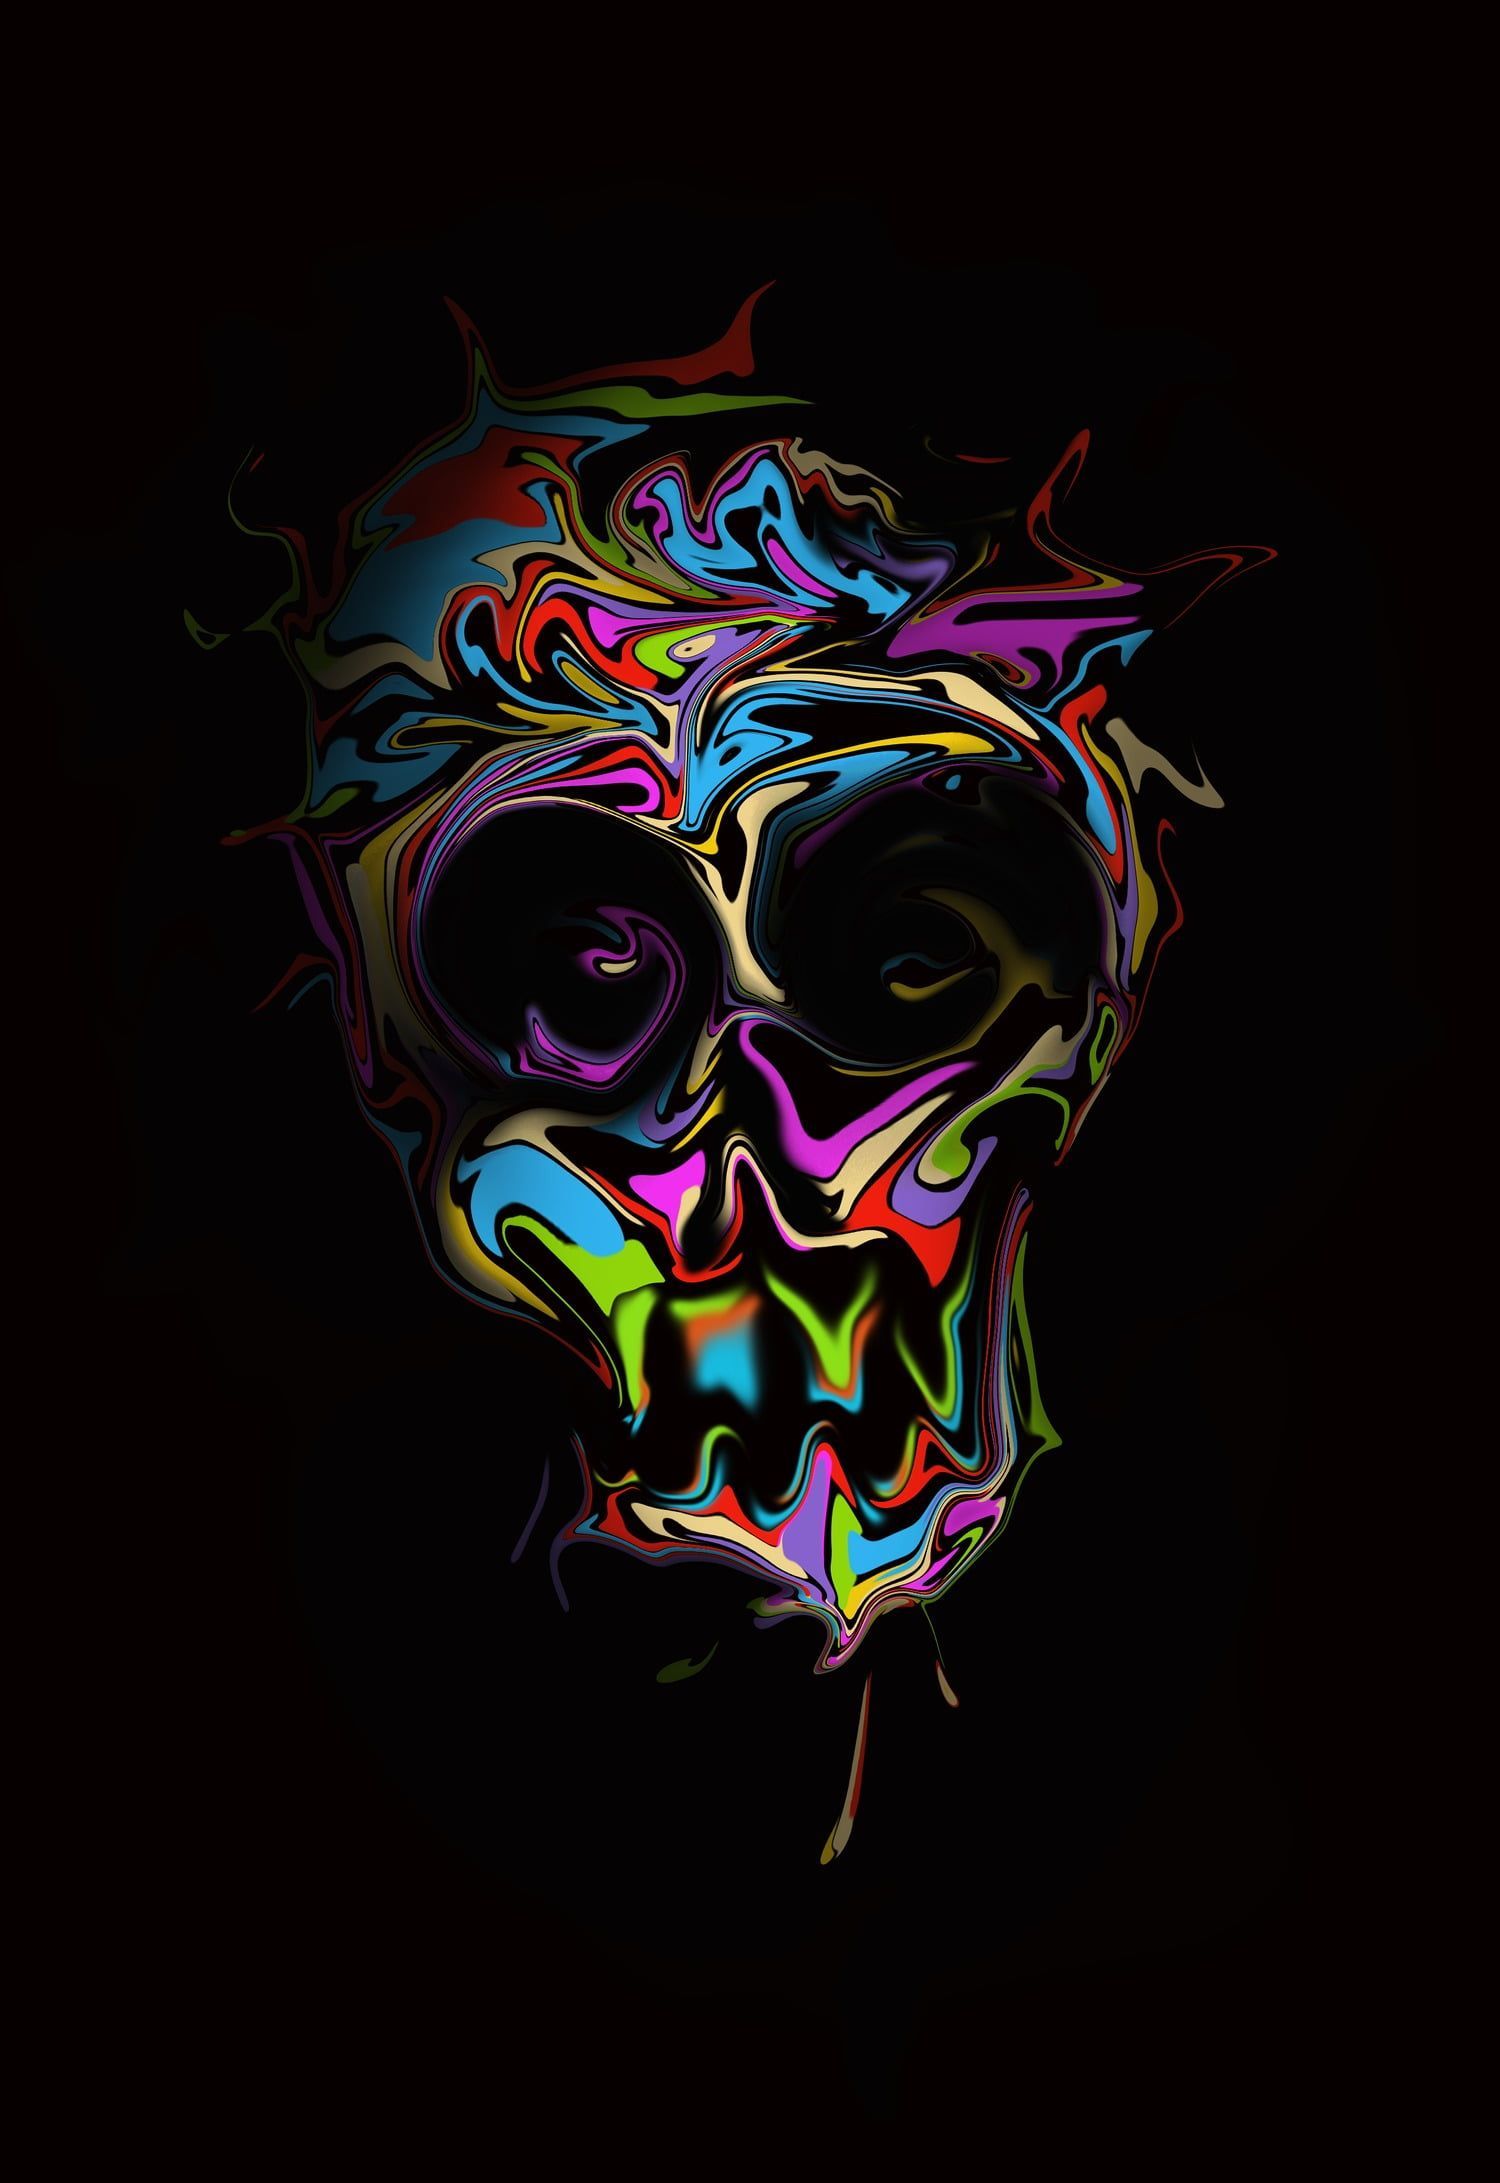 multicolored skull artwork digital art #skull simple background #colorful portrait display #abstract #dis. Skull artwork, Nature iphone wallpaper, Skull wallpaper